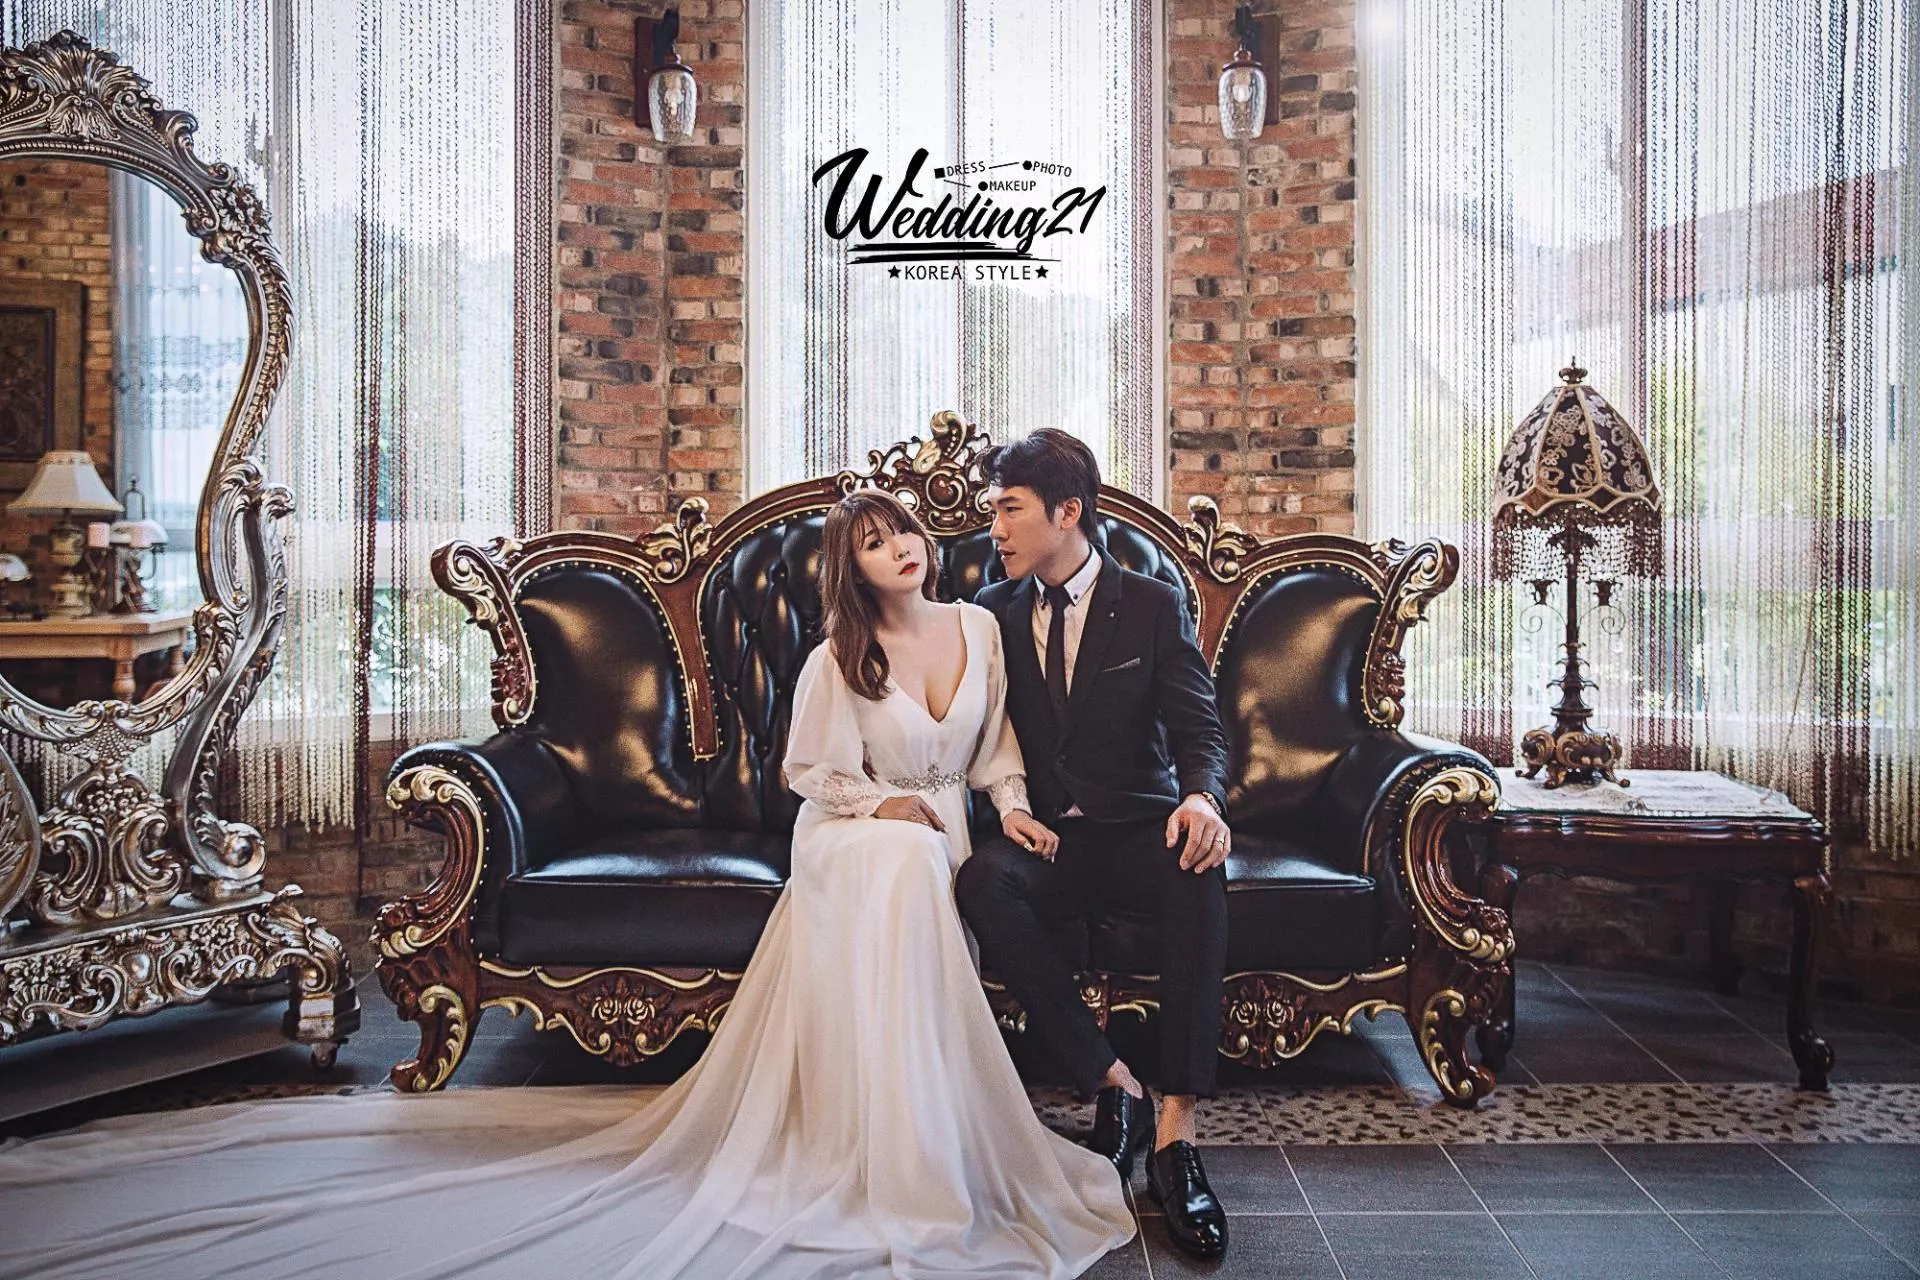 index-slider5-Wedding21韓式婚紗攝影|桃園婚紗攝影|桃園手工婚紗禮服|雙胞胎佩佩的店